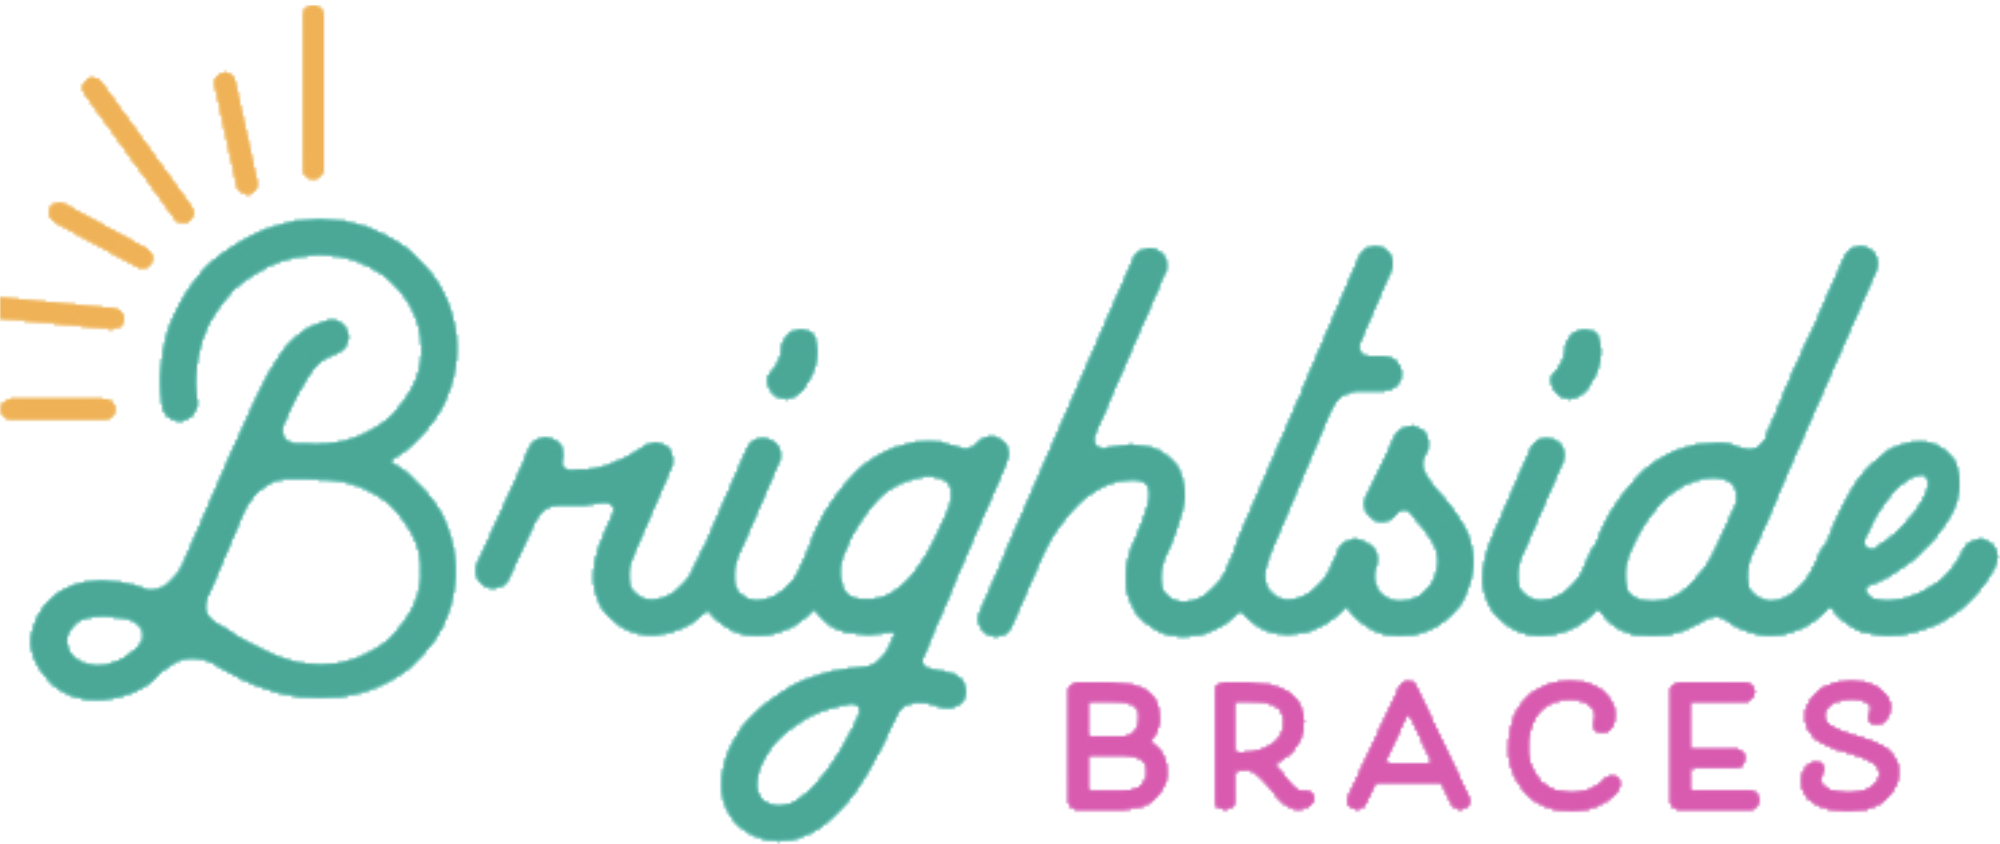 Brightside Braces logo